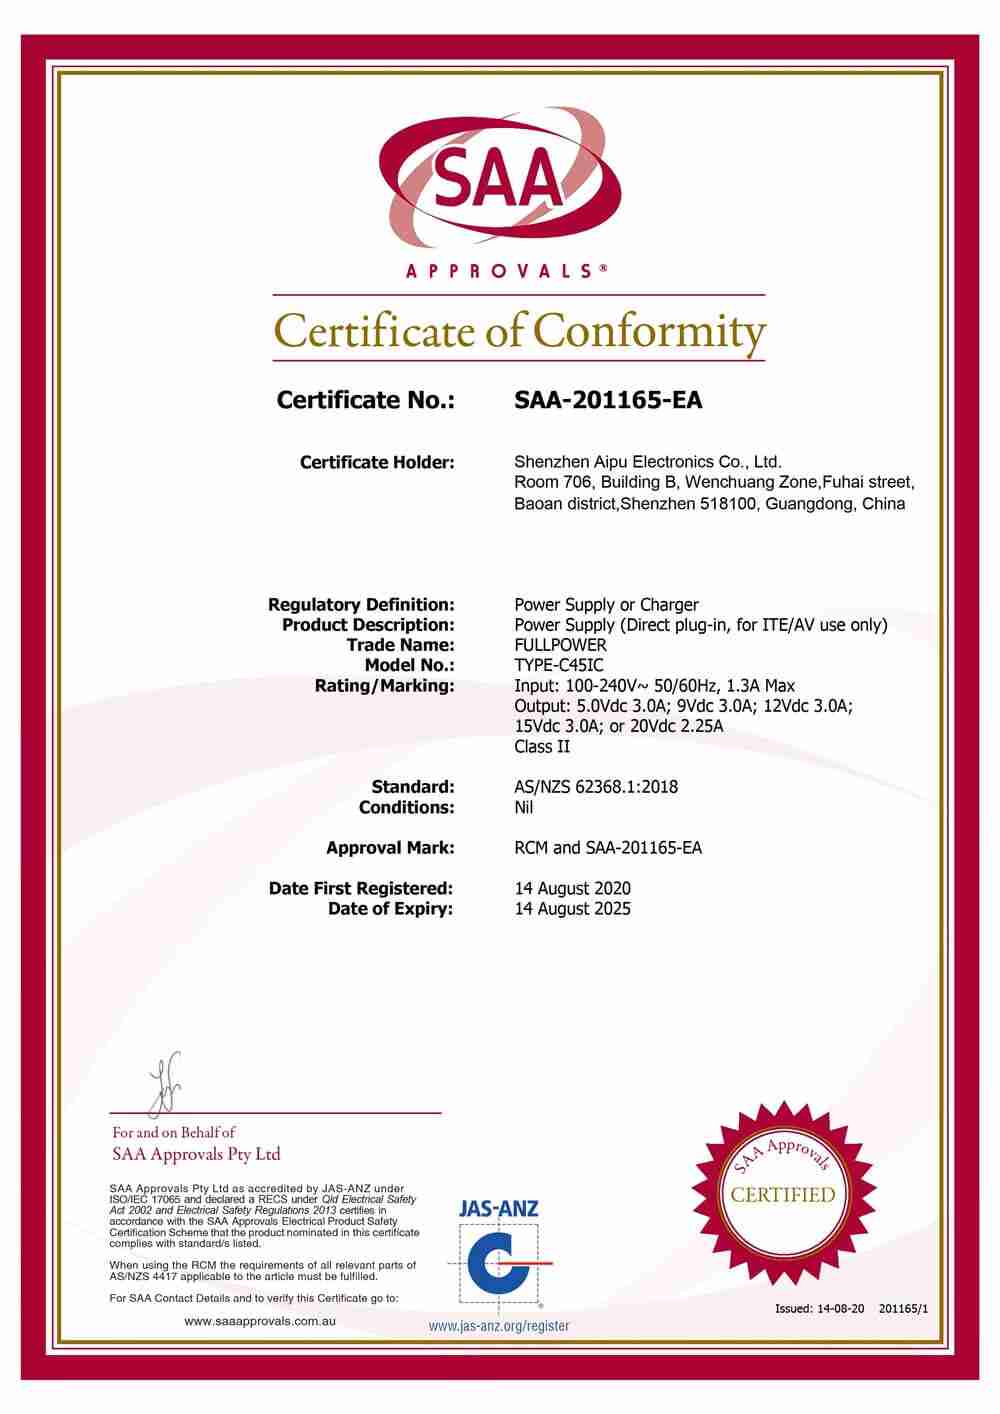 TYPE C45 series SAA certificate